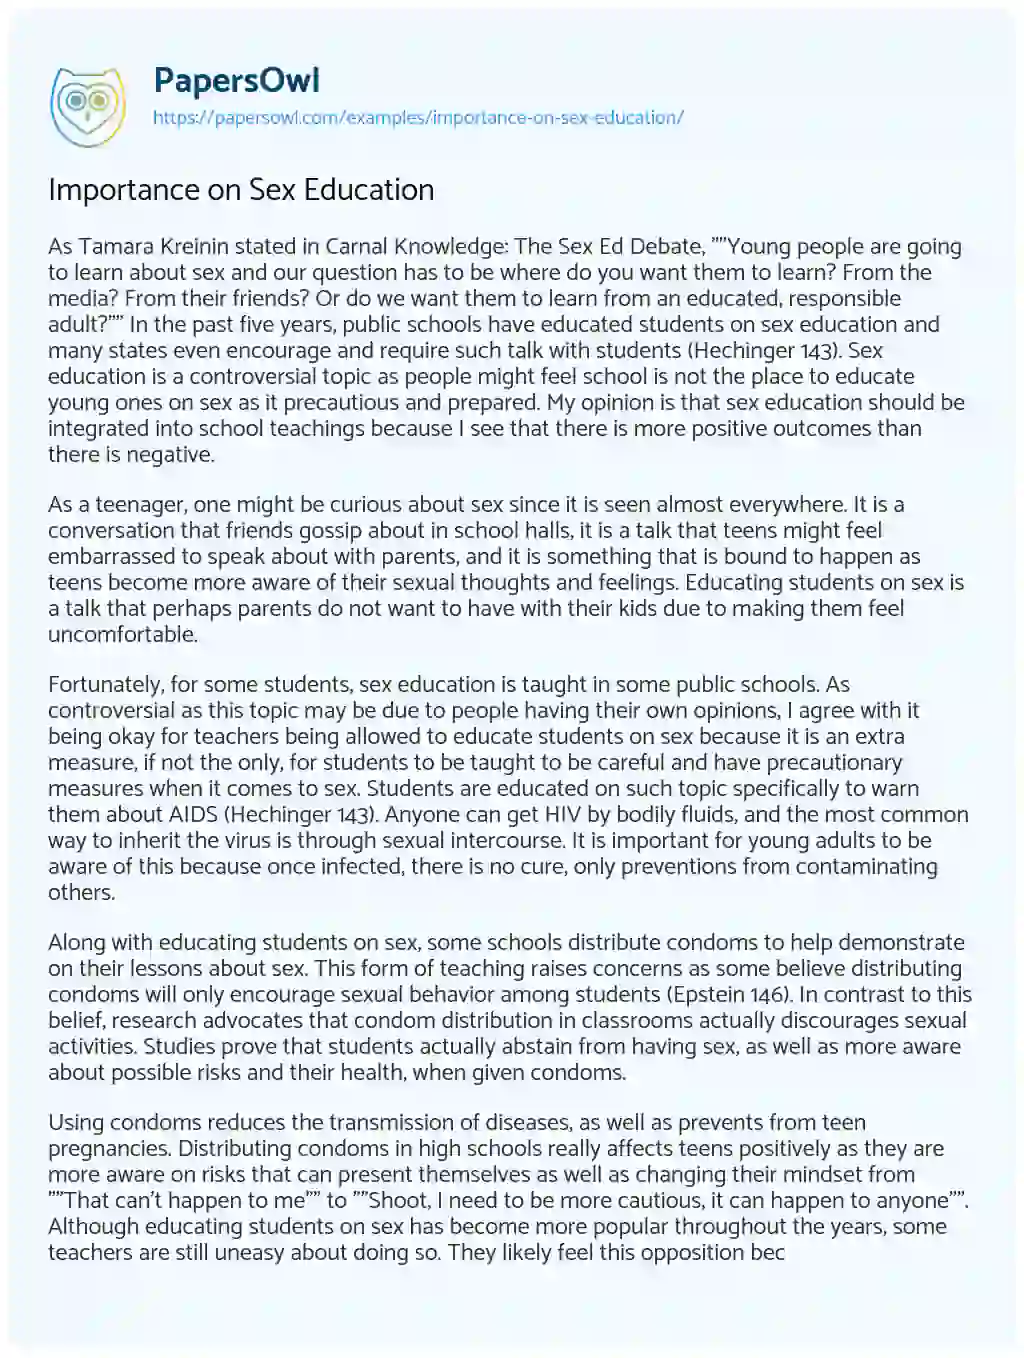 Essay on Importance on Sex Education